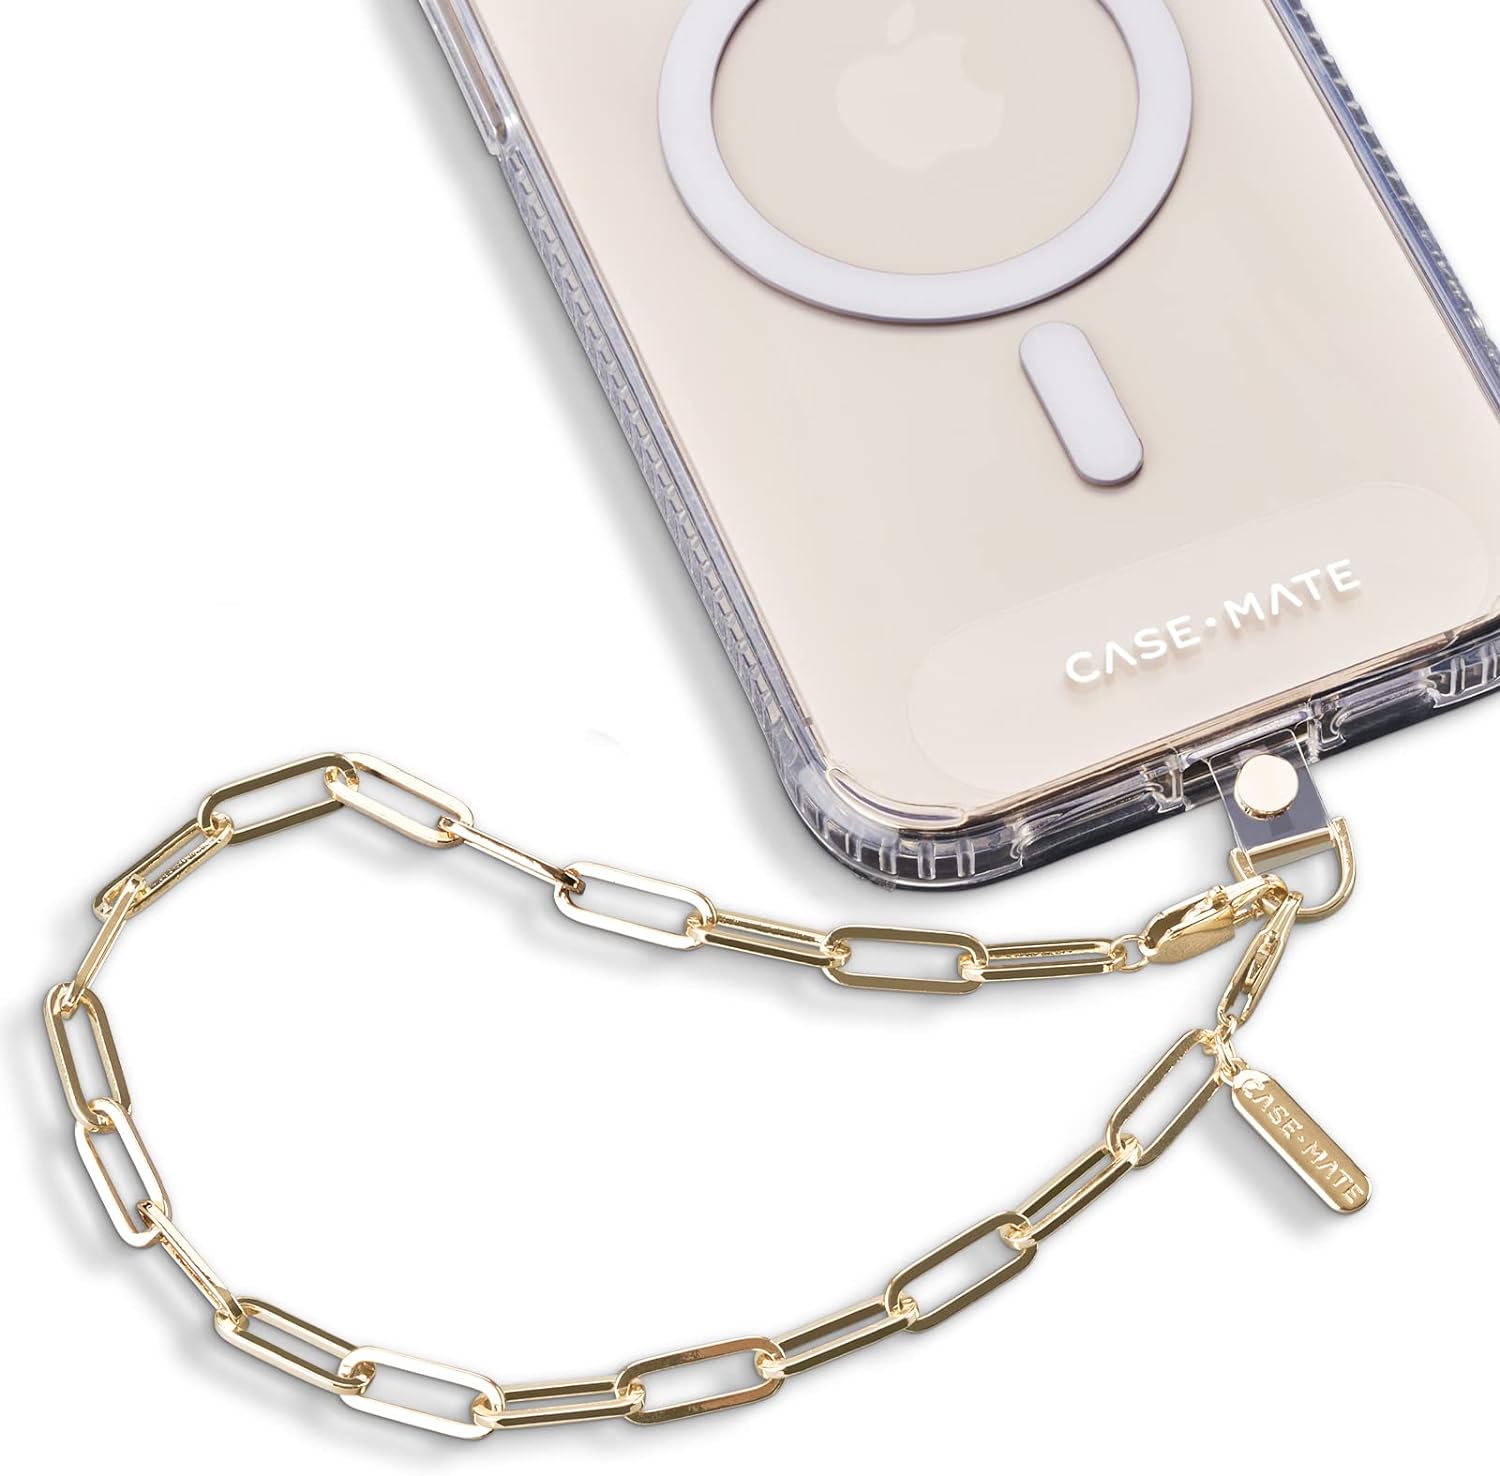 Case-Mate Phone Charm with Gold Metal Chain - Detachable Phone Lanyard, Hands-Free Wrist Strap, Adju